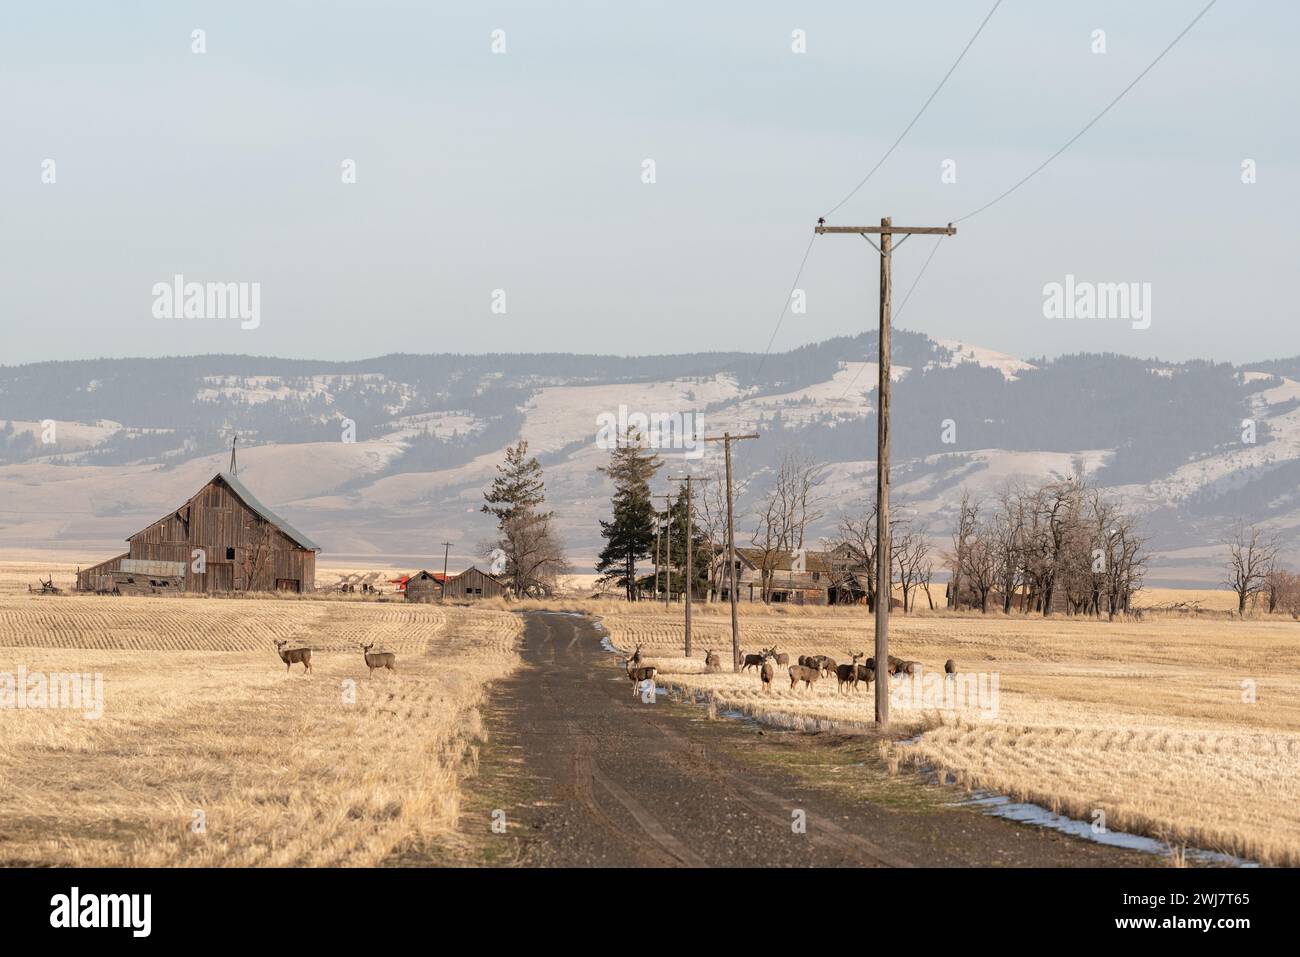 Mule deer grazing on crop stubble near old farm buildings in Asotin County, Washington. Stock Photo